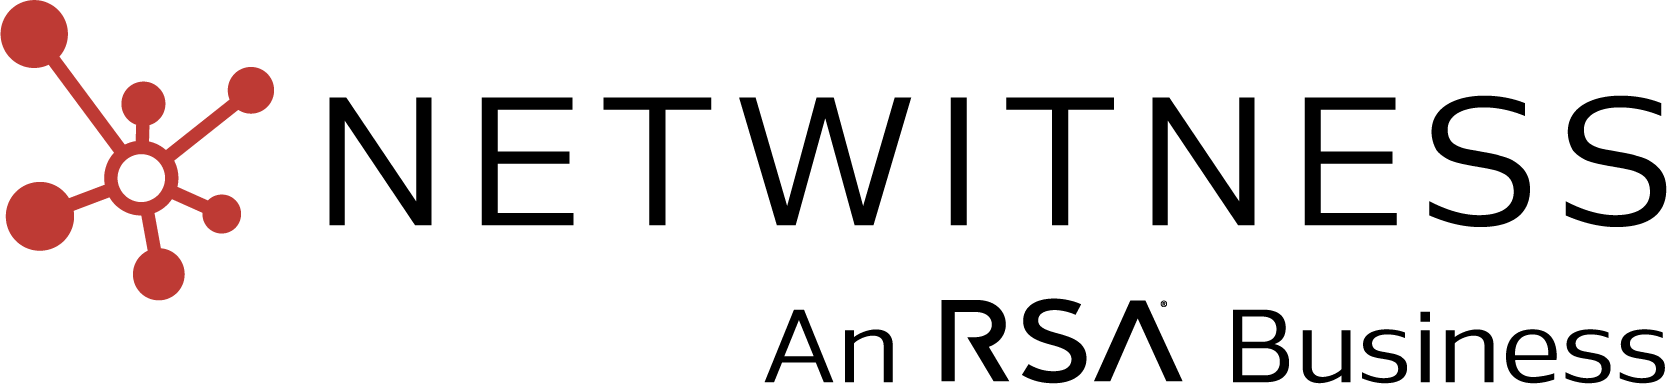 Digitalnetwitness-logo-RGB.PNG